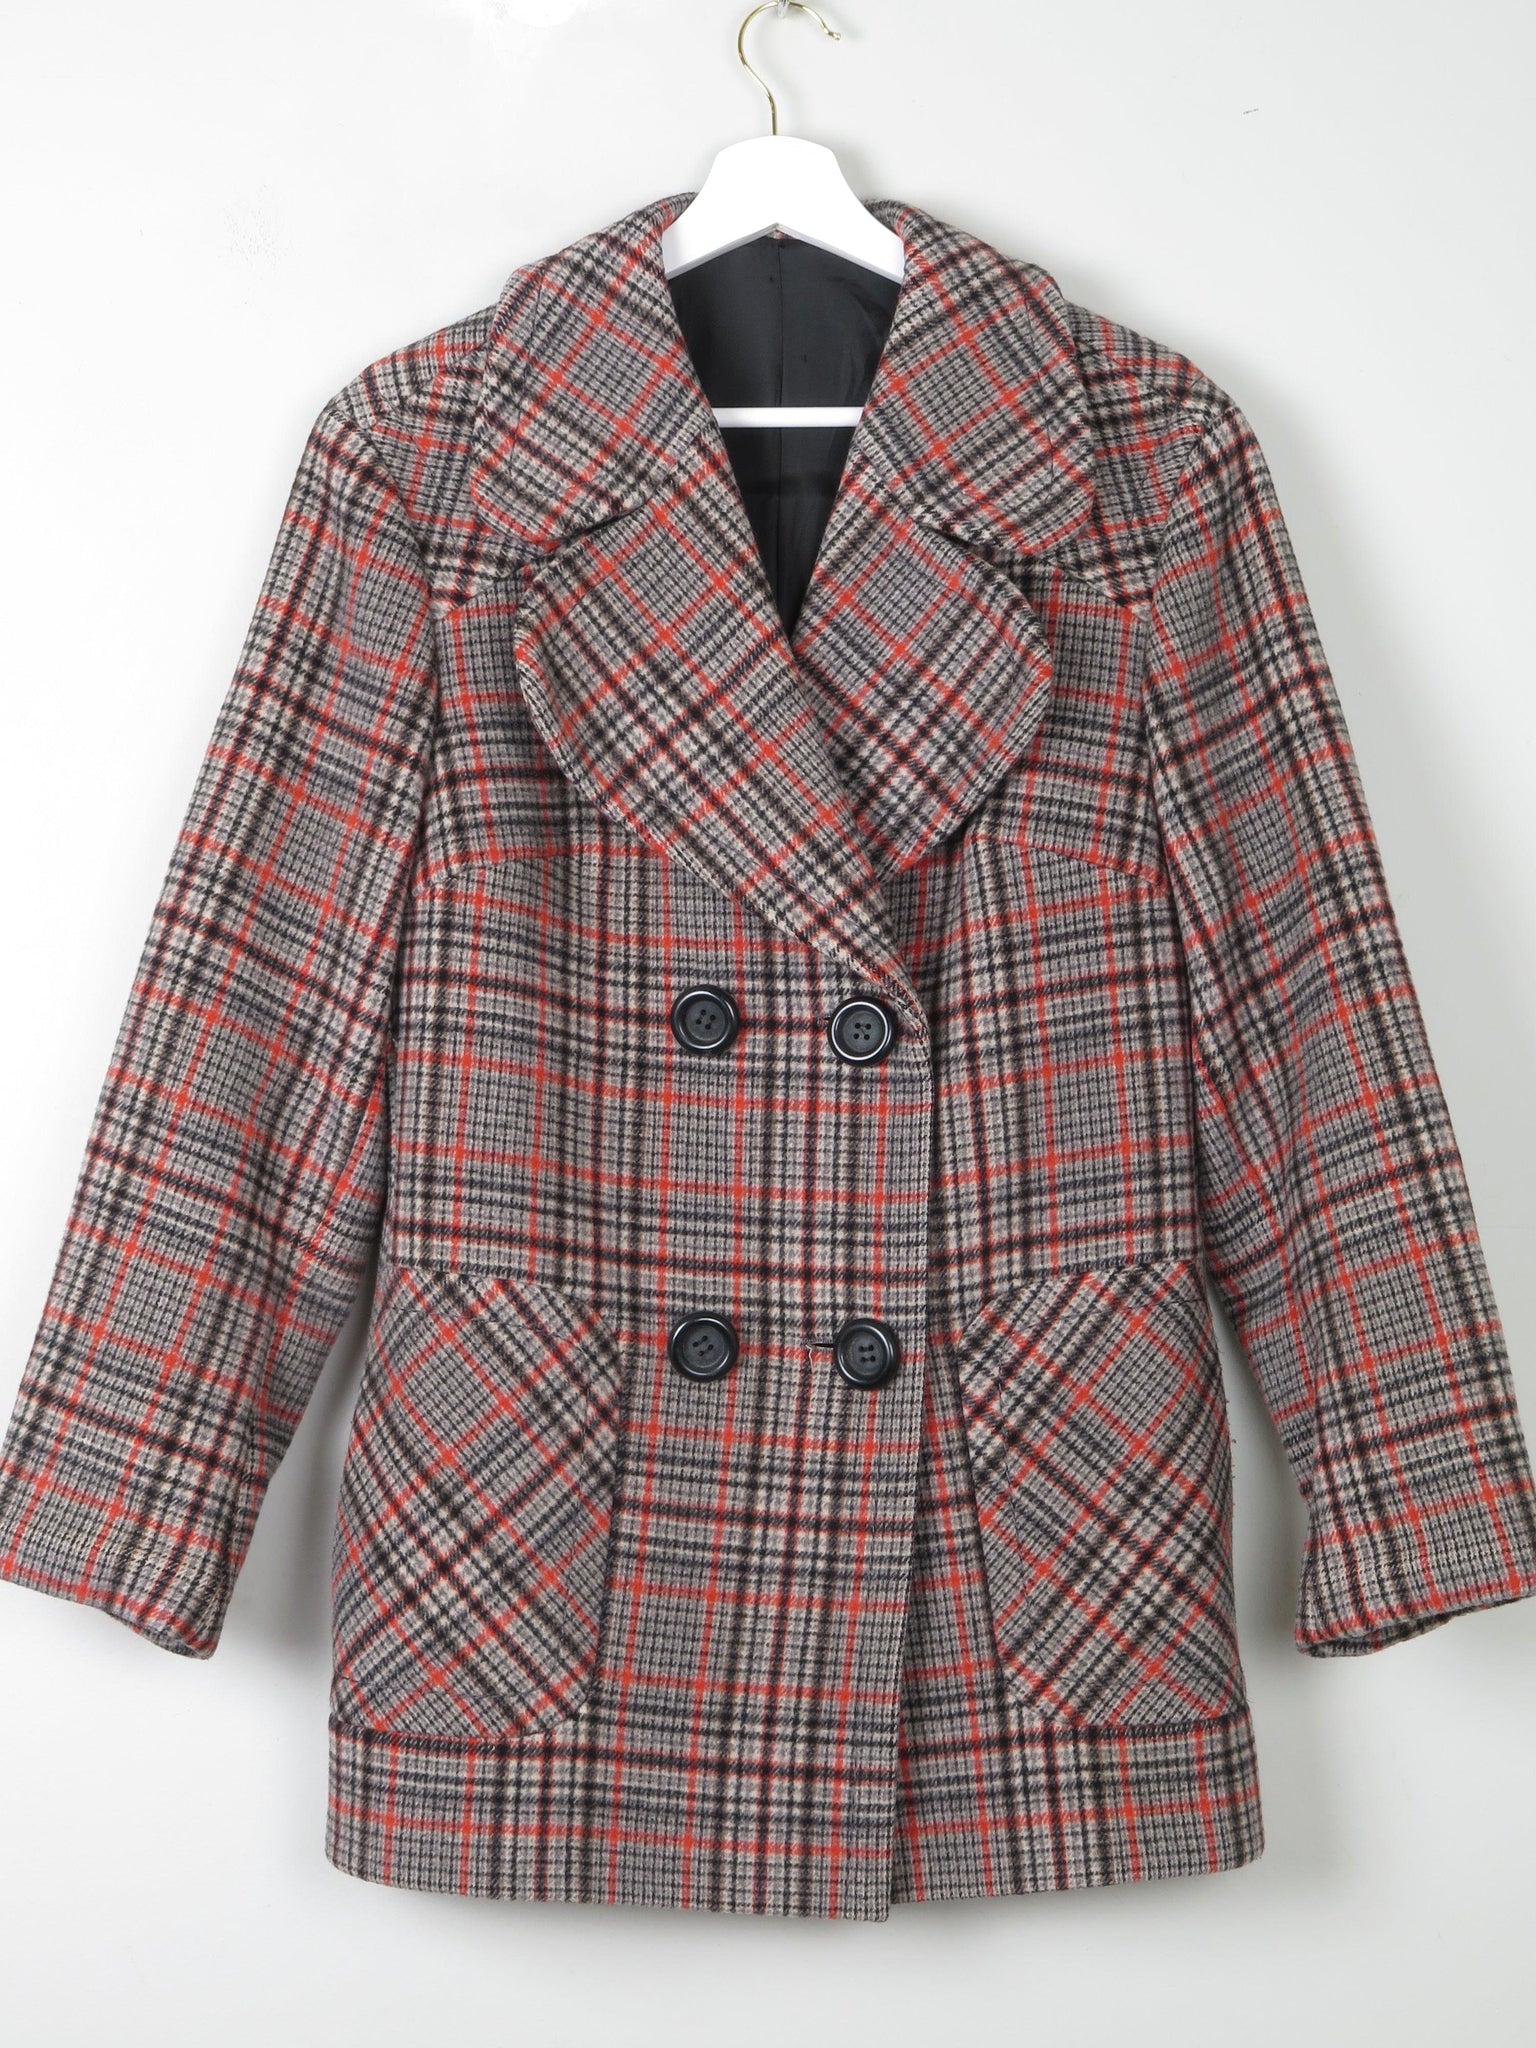 Women's Vintage 1970s Black/Grey/Red Check Short Coat M